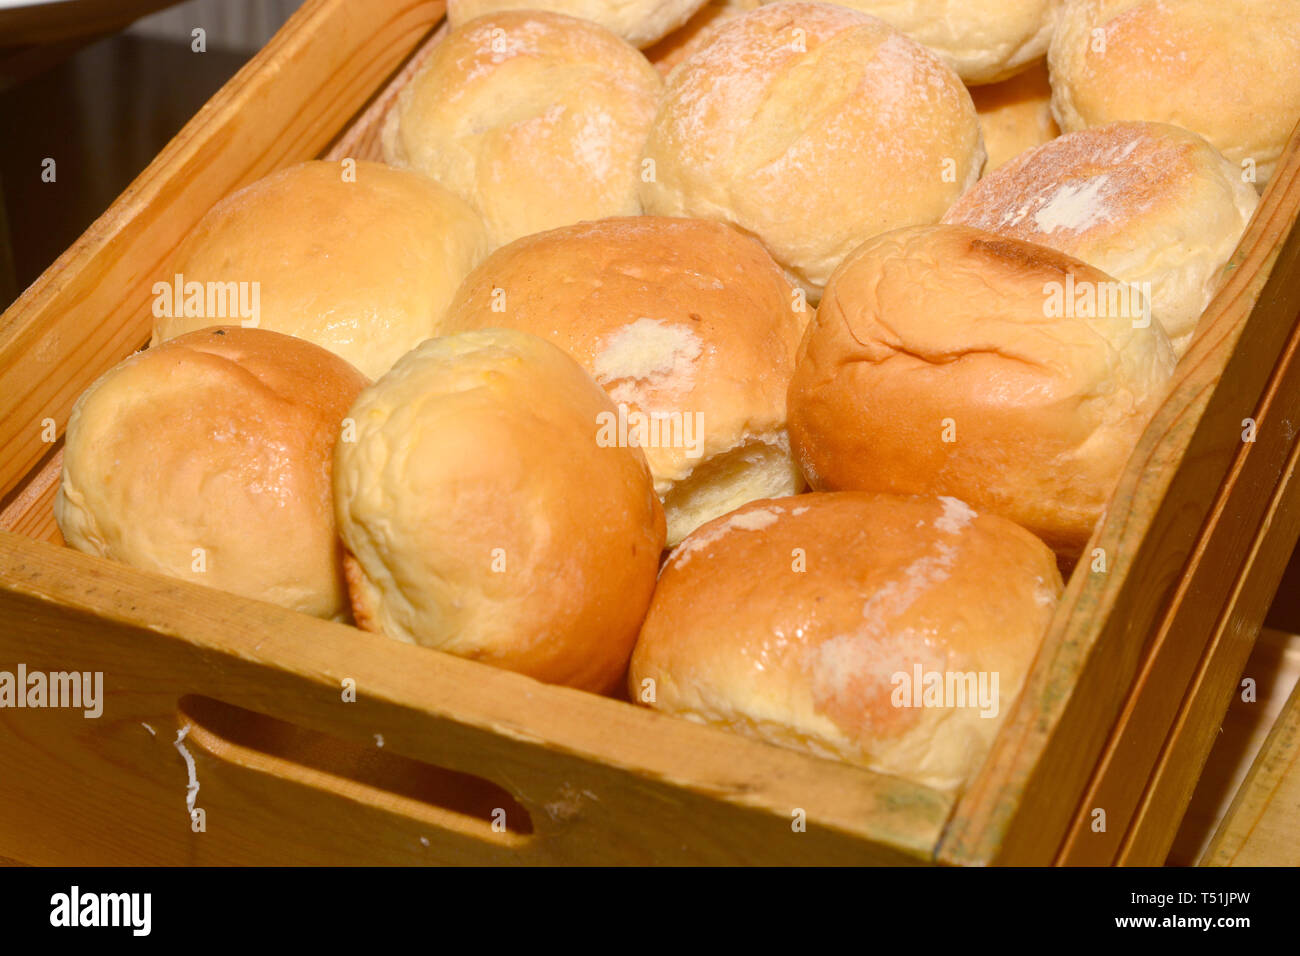 Close Up Bread Rolls In Mold On Wooden Box Stock Photo Alamy,Cornish Pasty Recipe